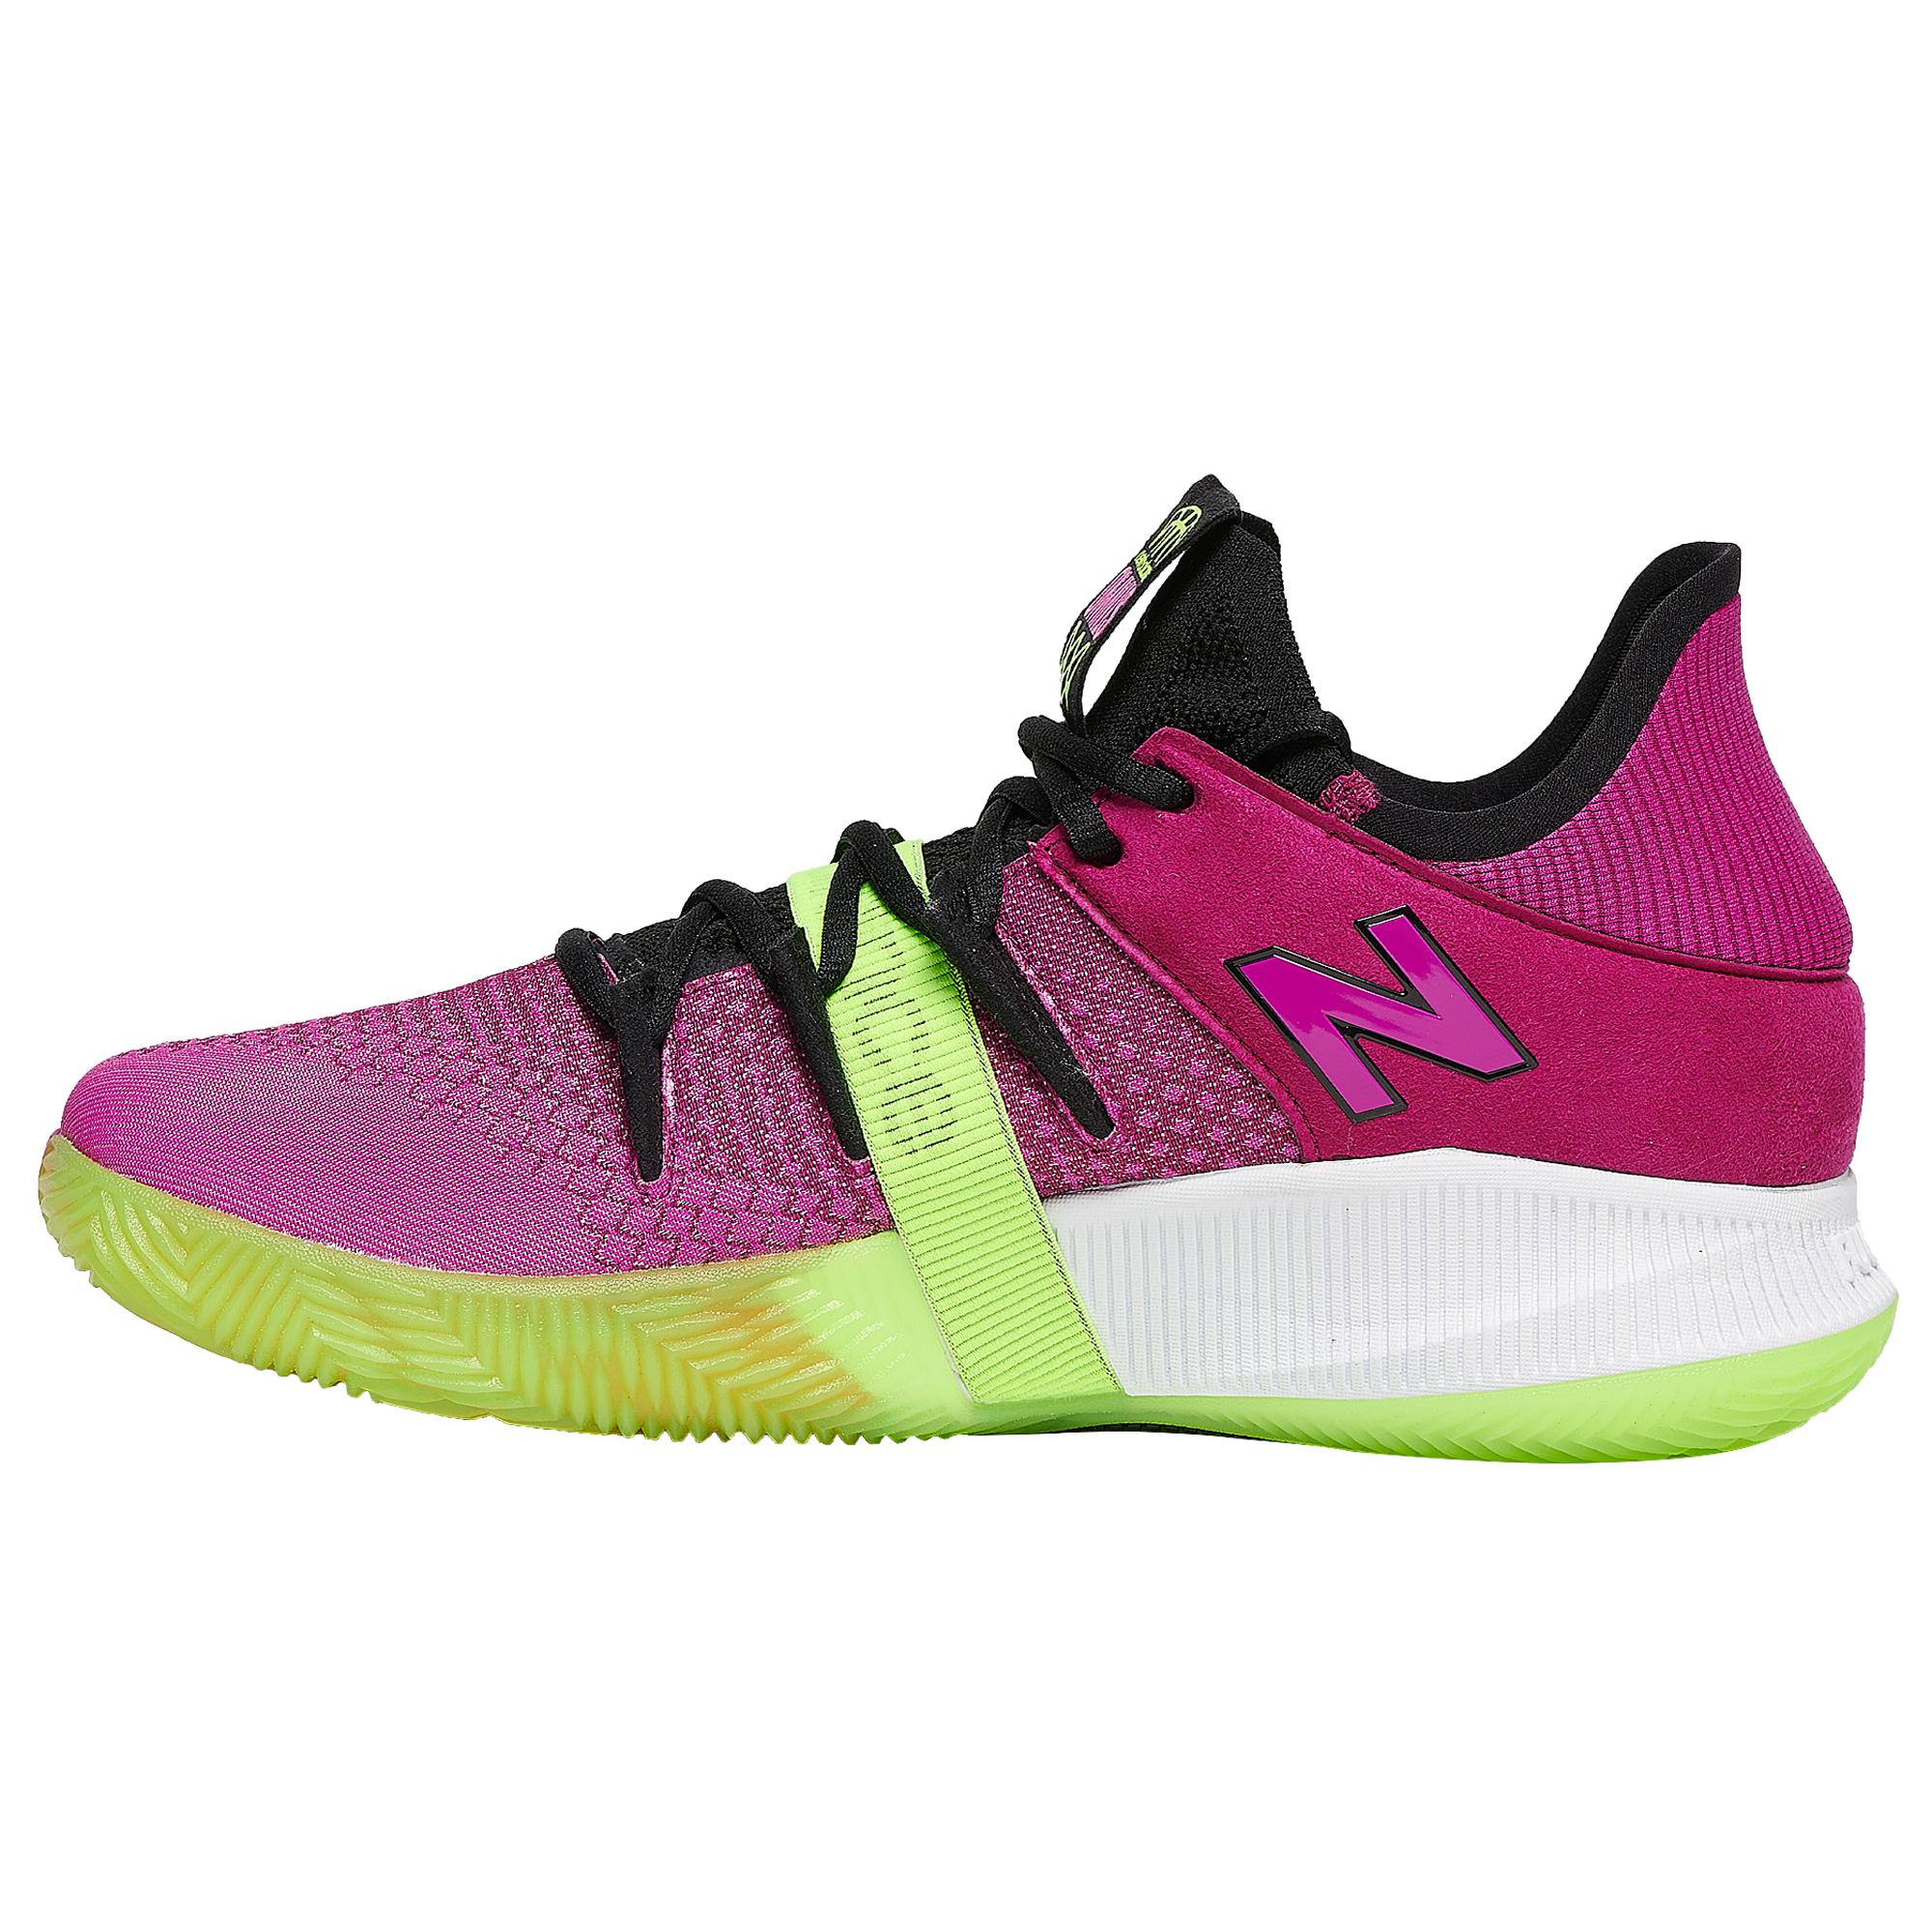 new balance leonard basketball shoes